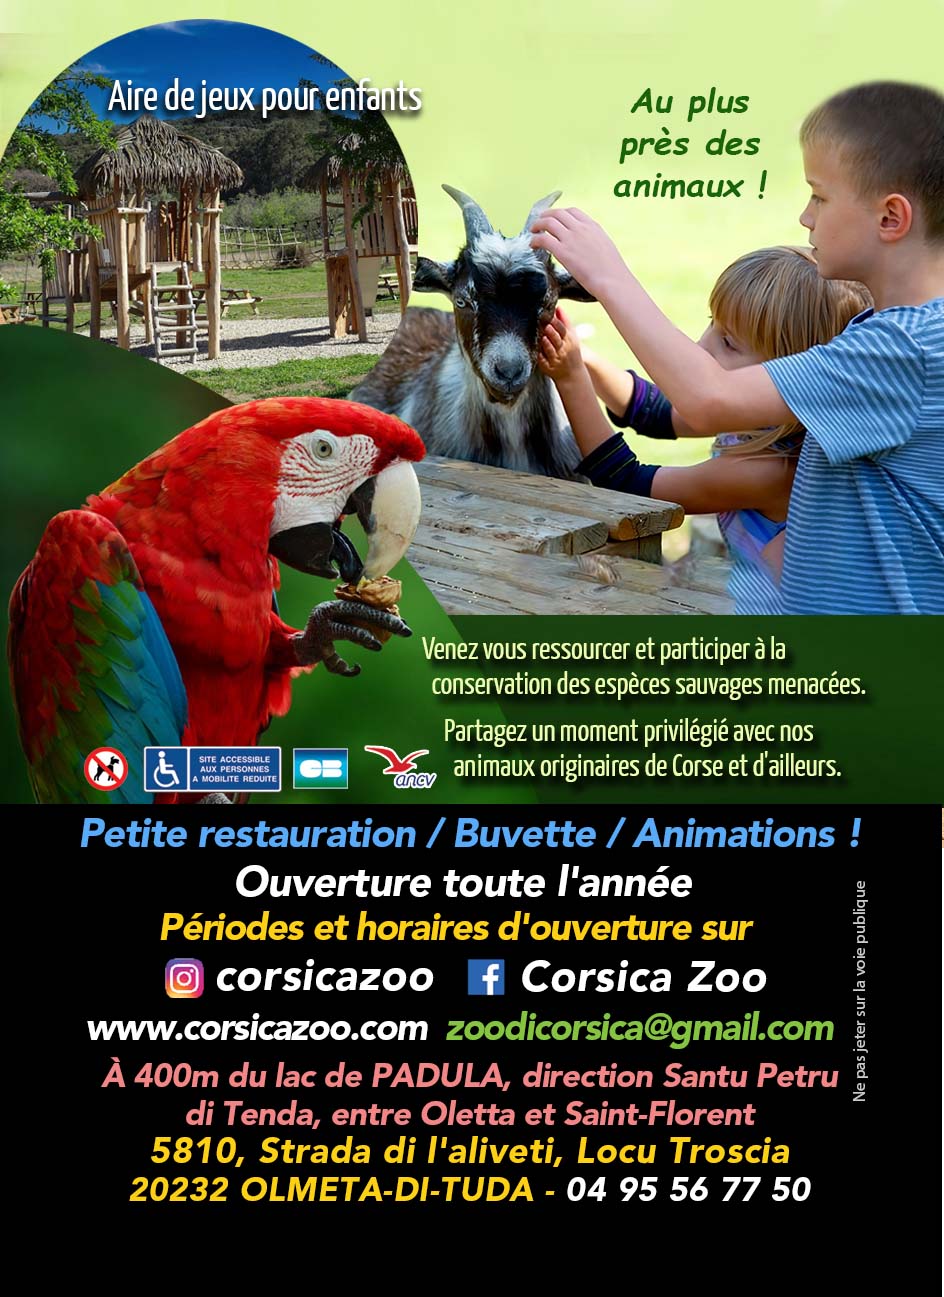 Corsica Zoo